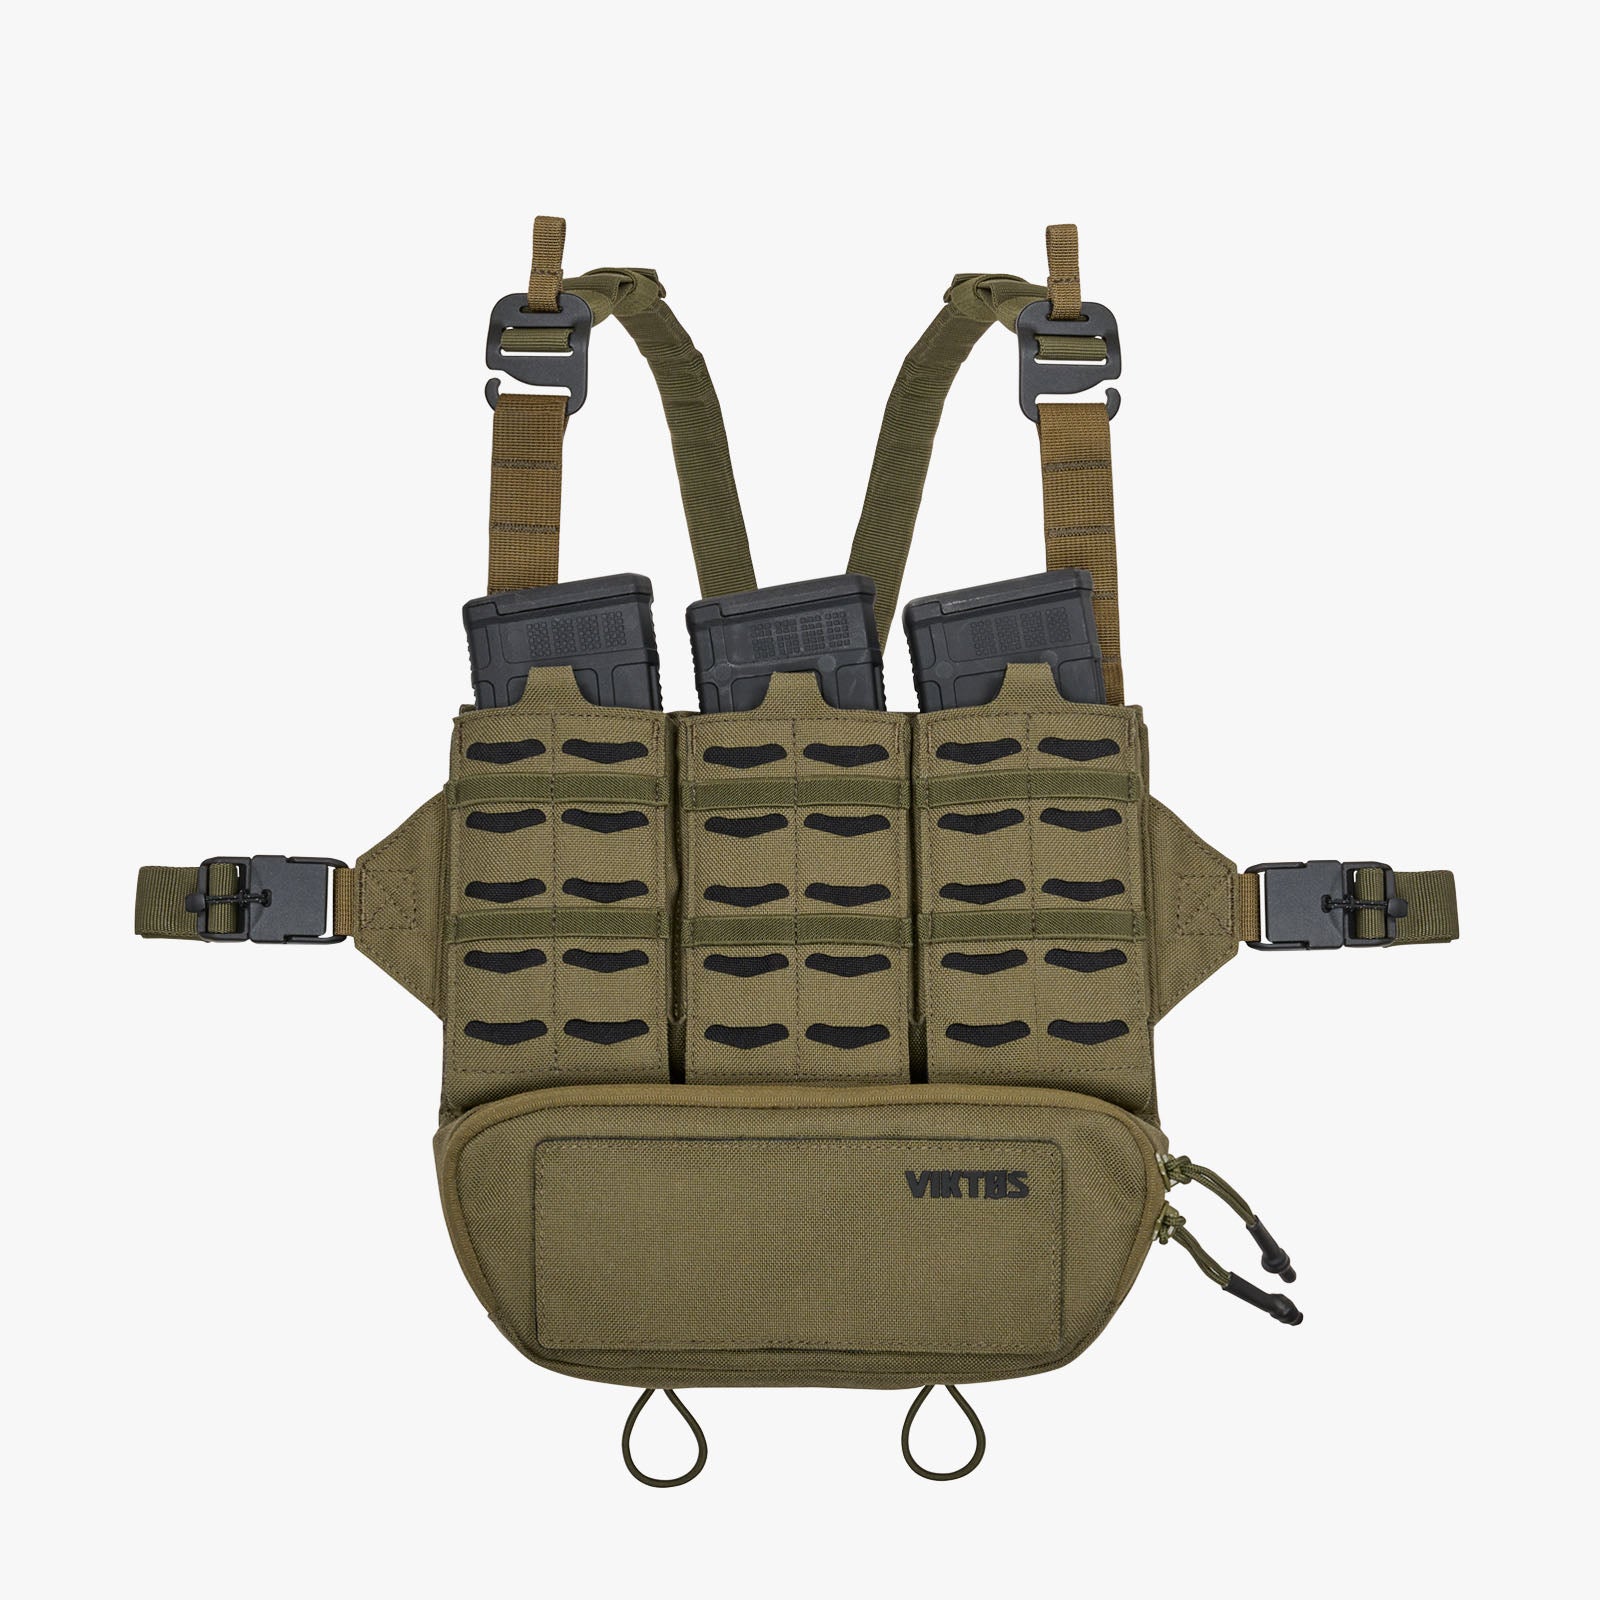 VIKTOS Taculus MX Chest Rig Bags, Packs and Cases VIKTOS Ranger Tactical Gear Supplier Tactical Distributors Australia